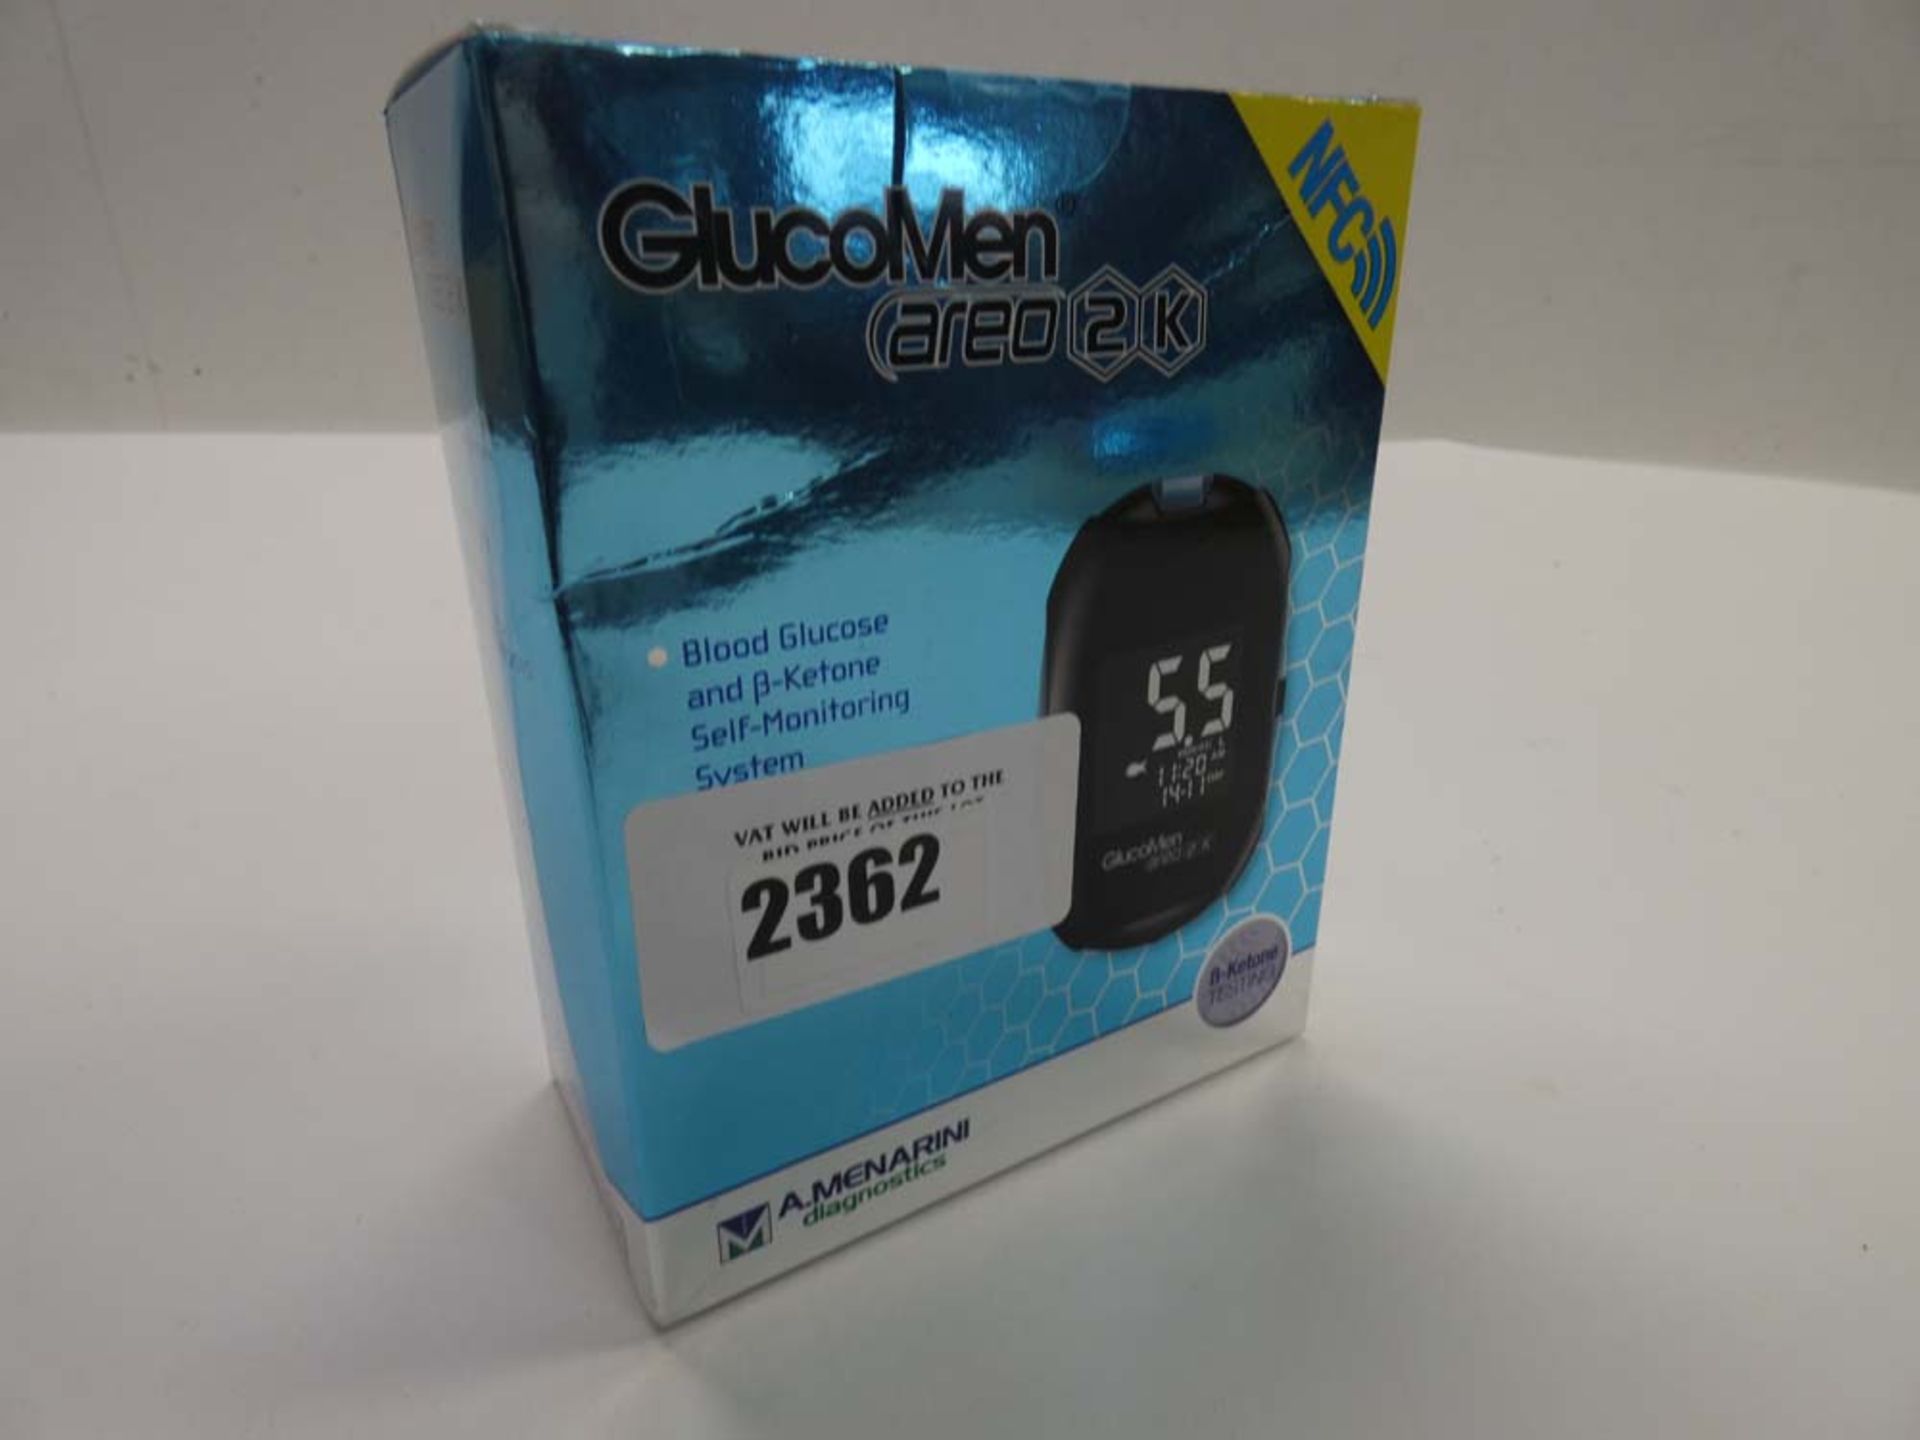 GlucoMen Area 2K blood glucose monitor